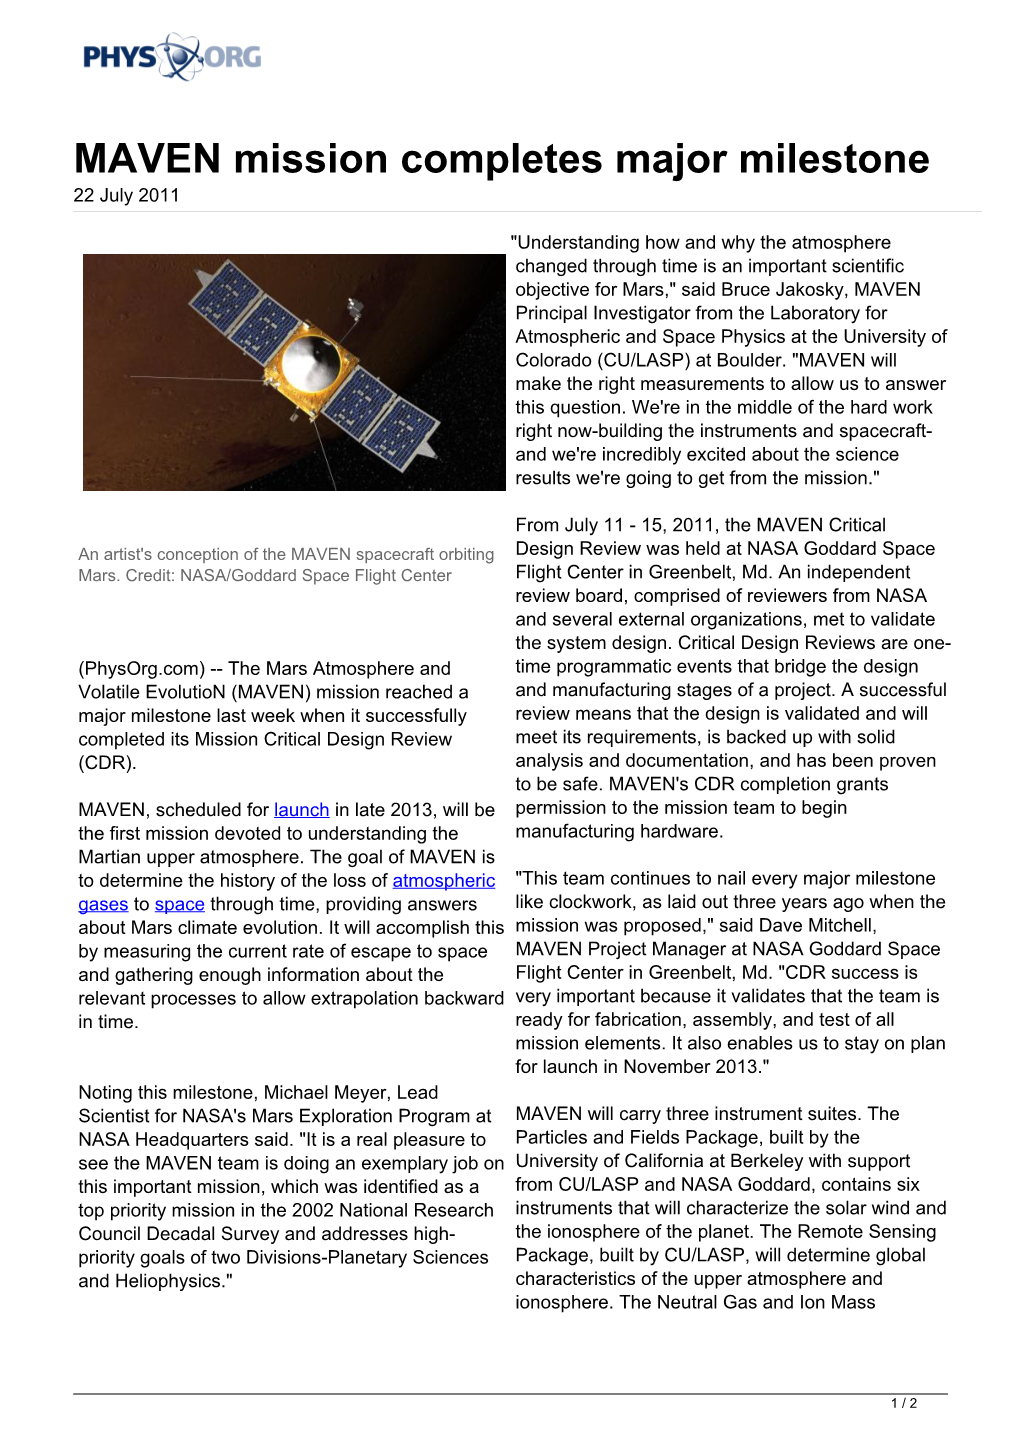 MAVEN Mission Completes Major Milestone 22 July 2011